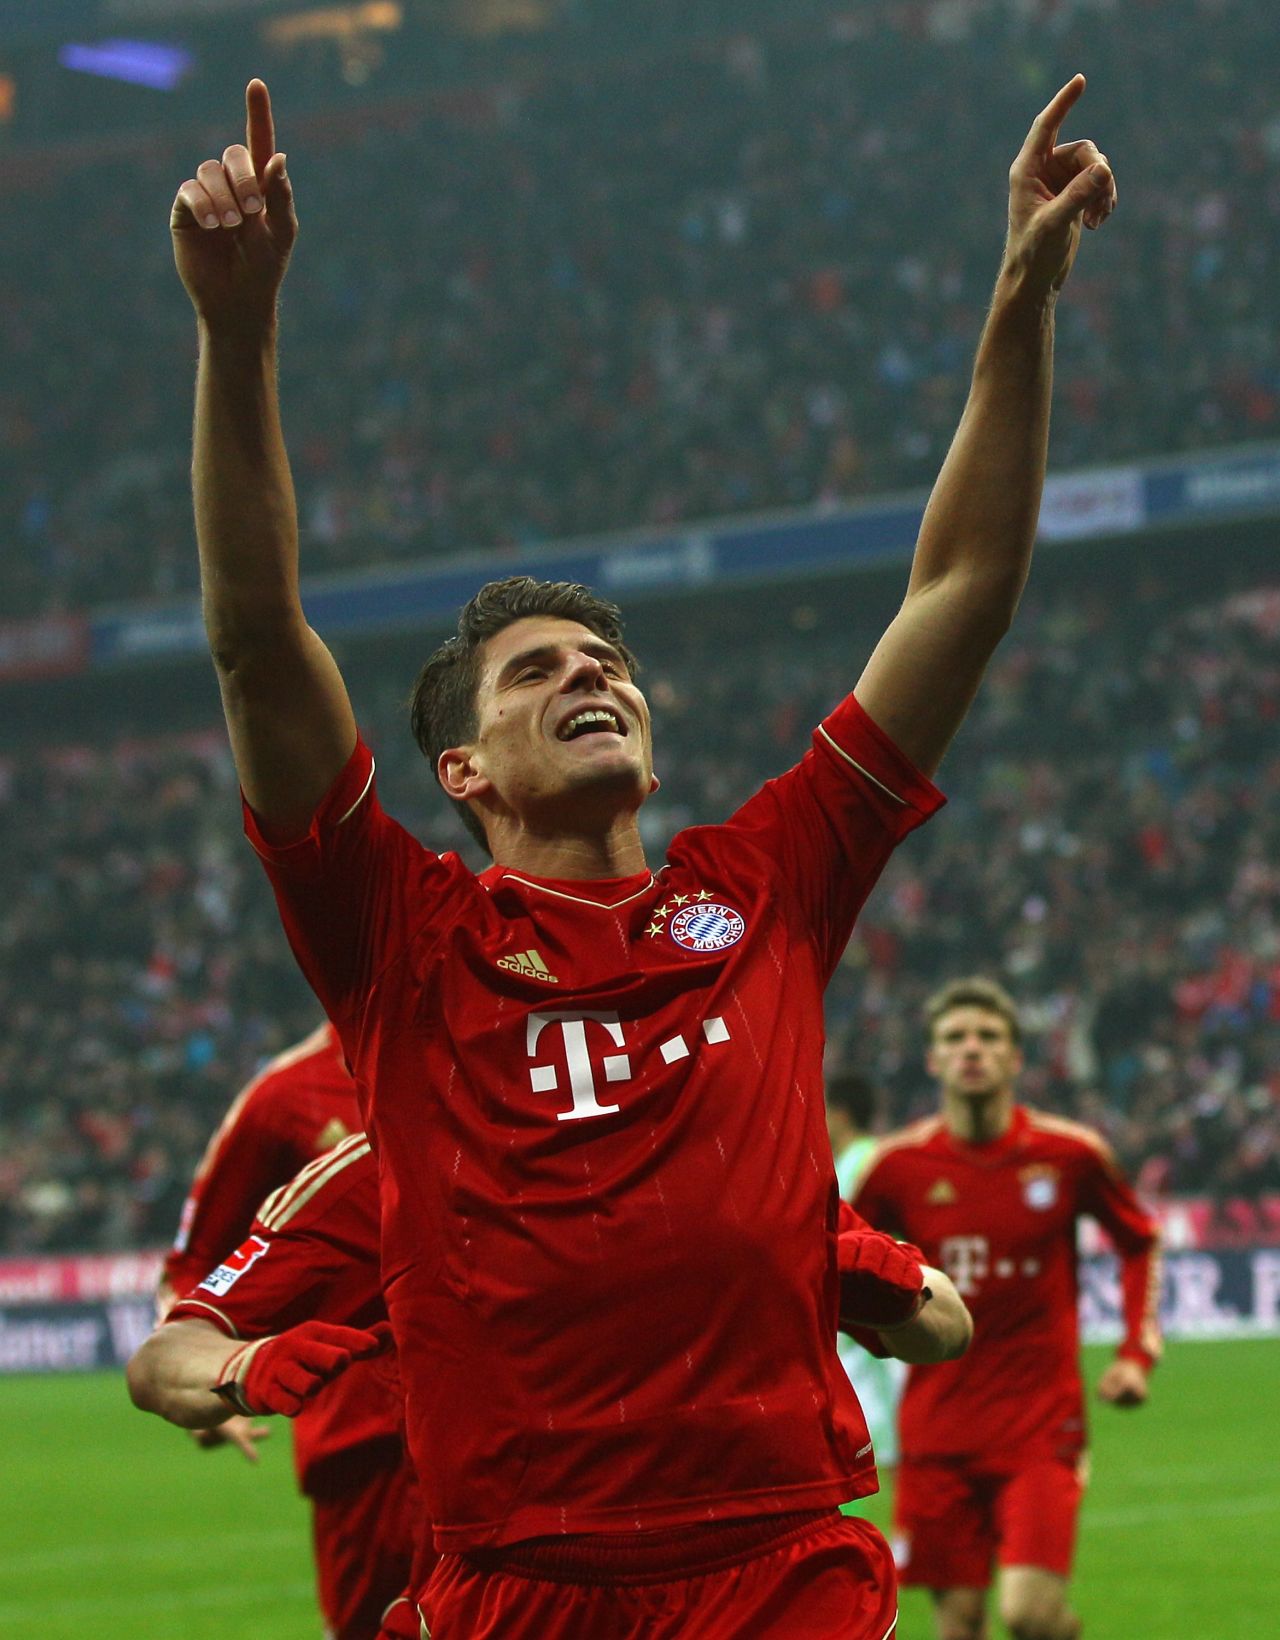 German champions Bayern Munich had the fourth-highest revenue in European football with €321.4 million.